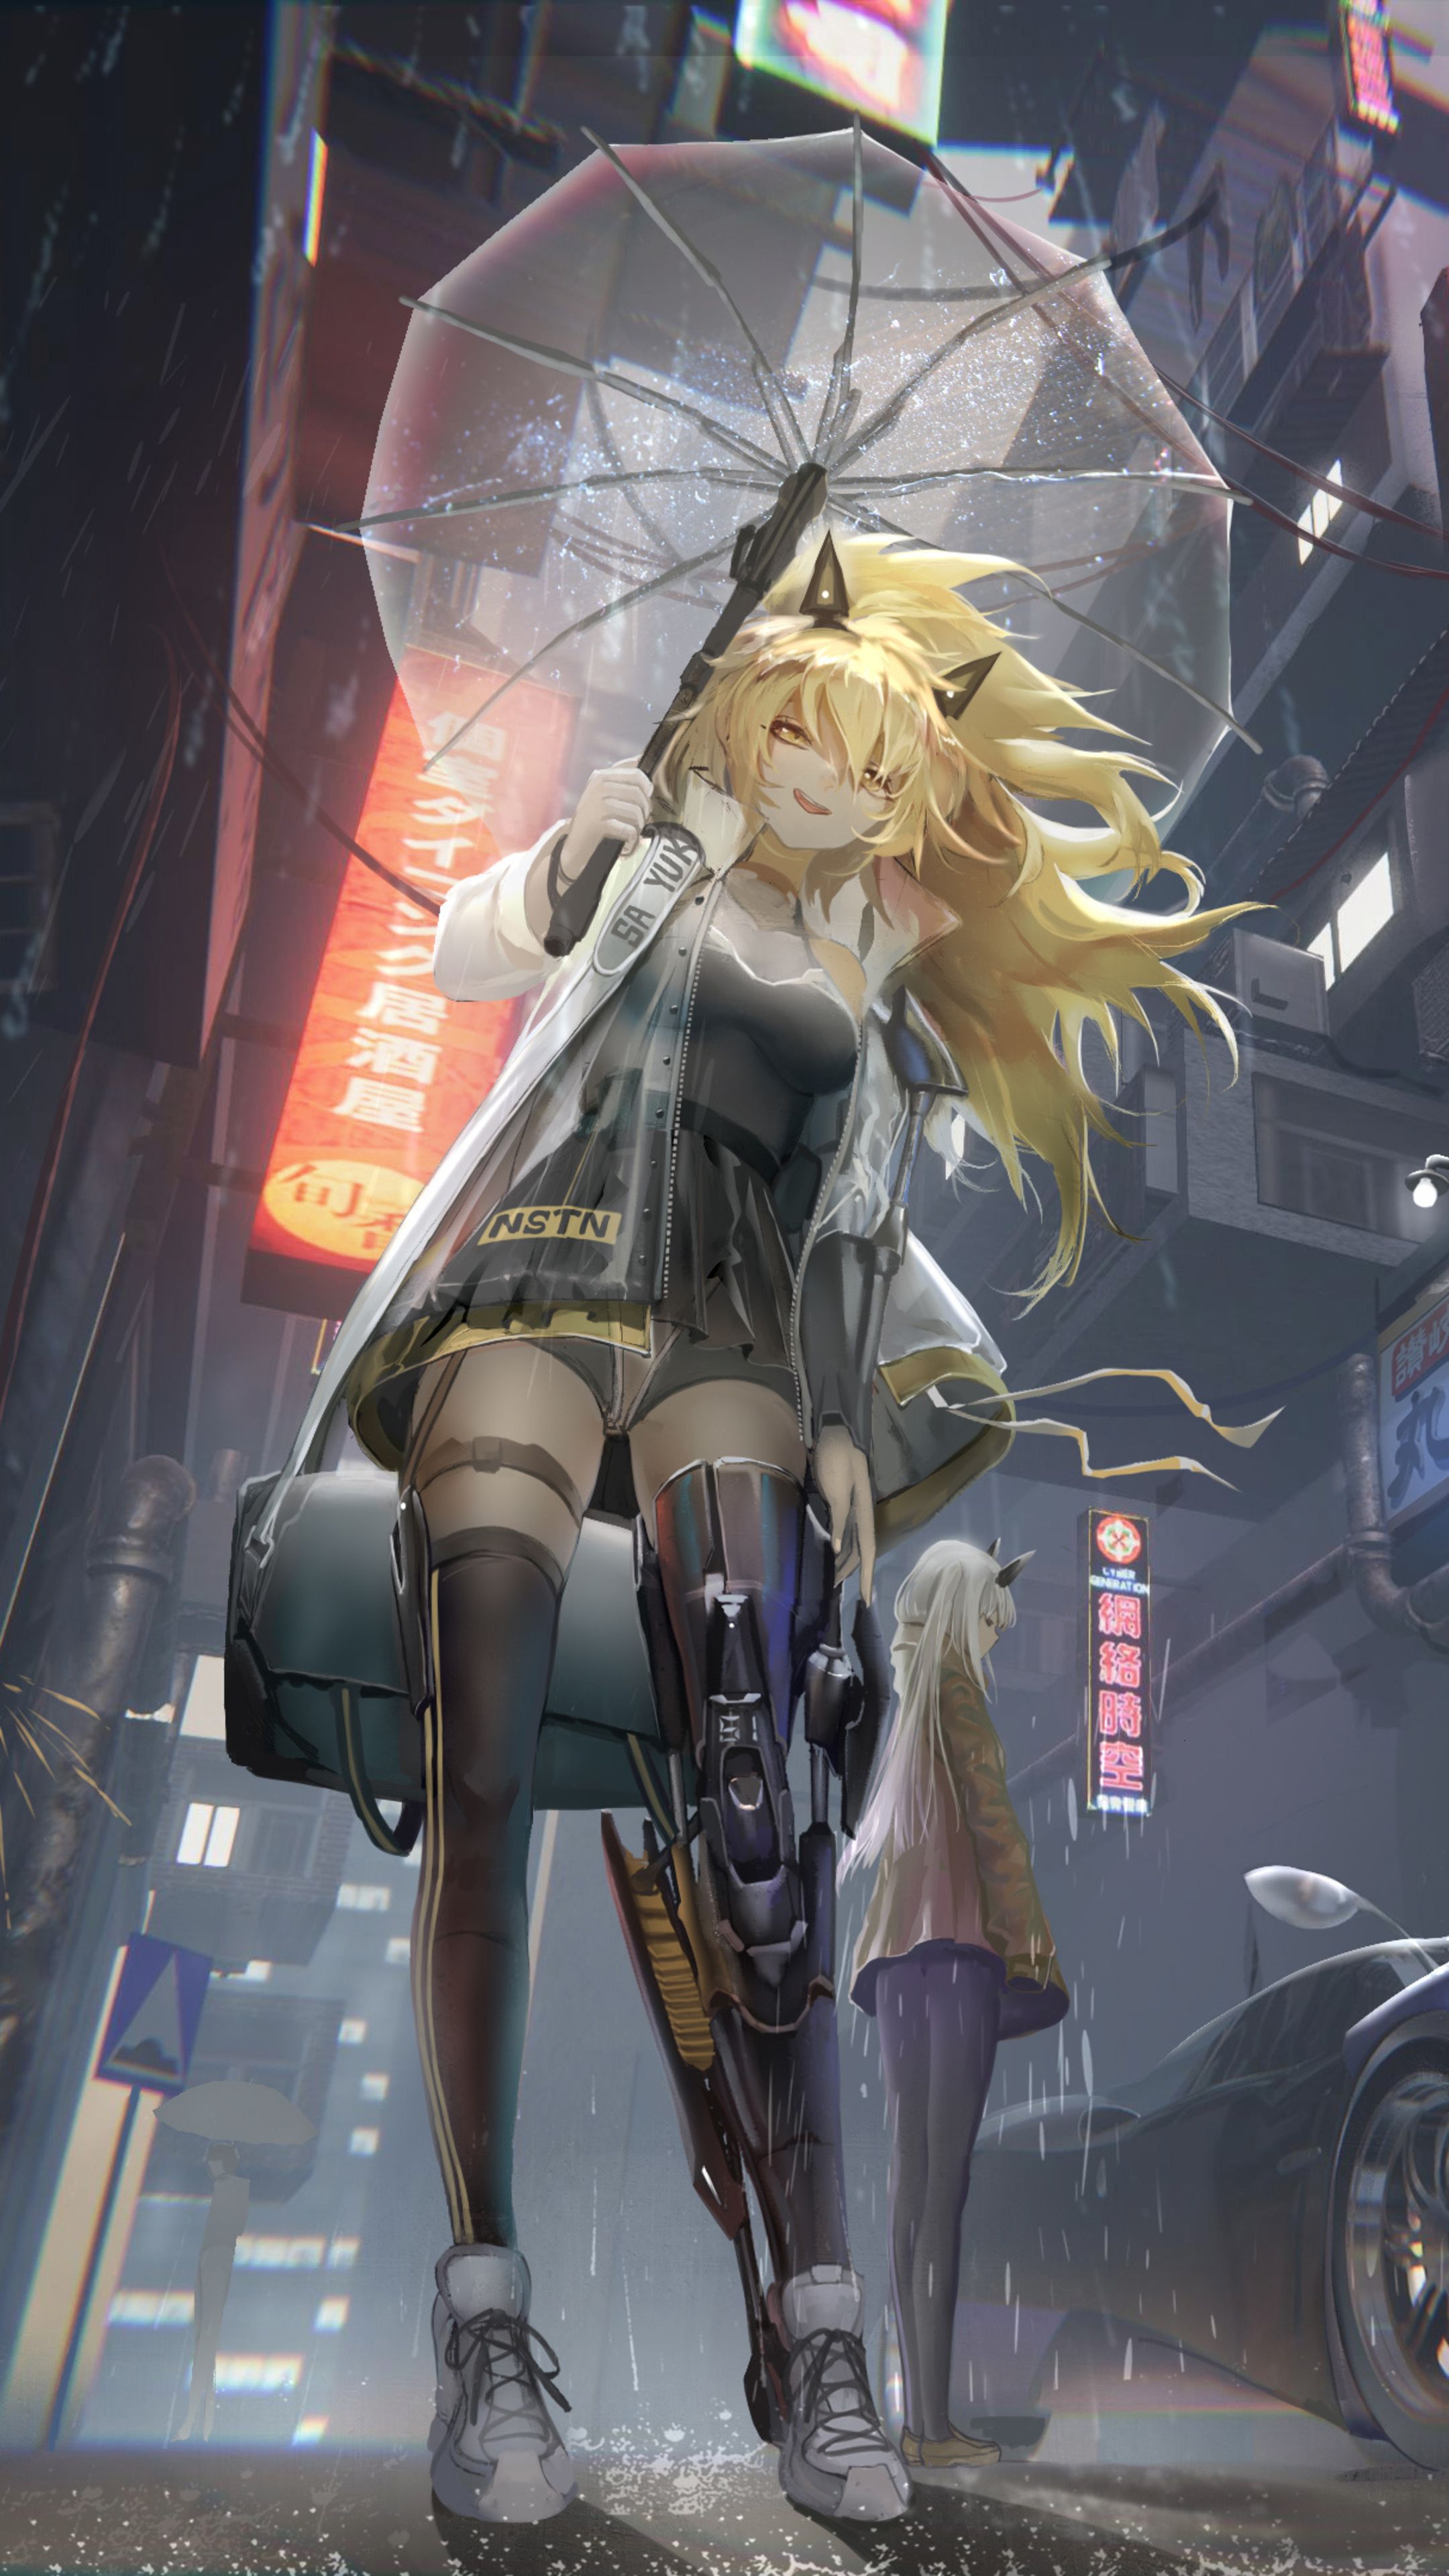 Futuristic Attack on Titan? - Anime & Manga  Cyberpunk anime, Anime  wallpaper, Anime girl